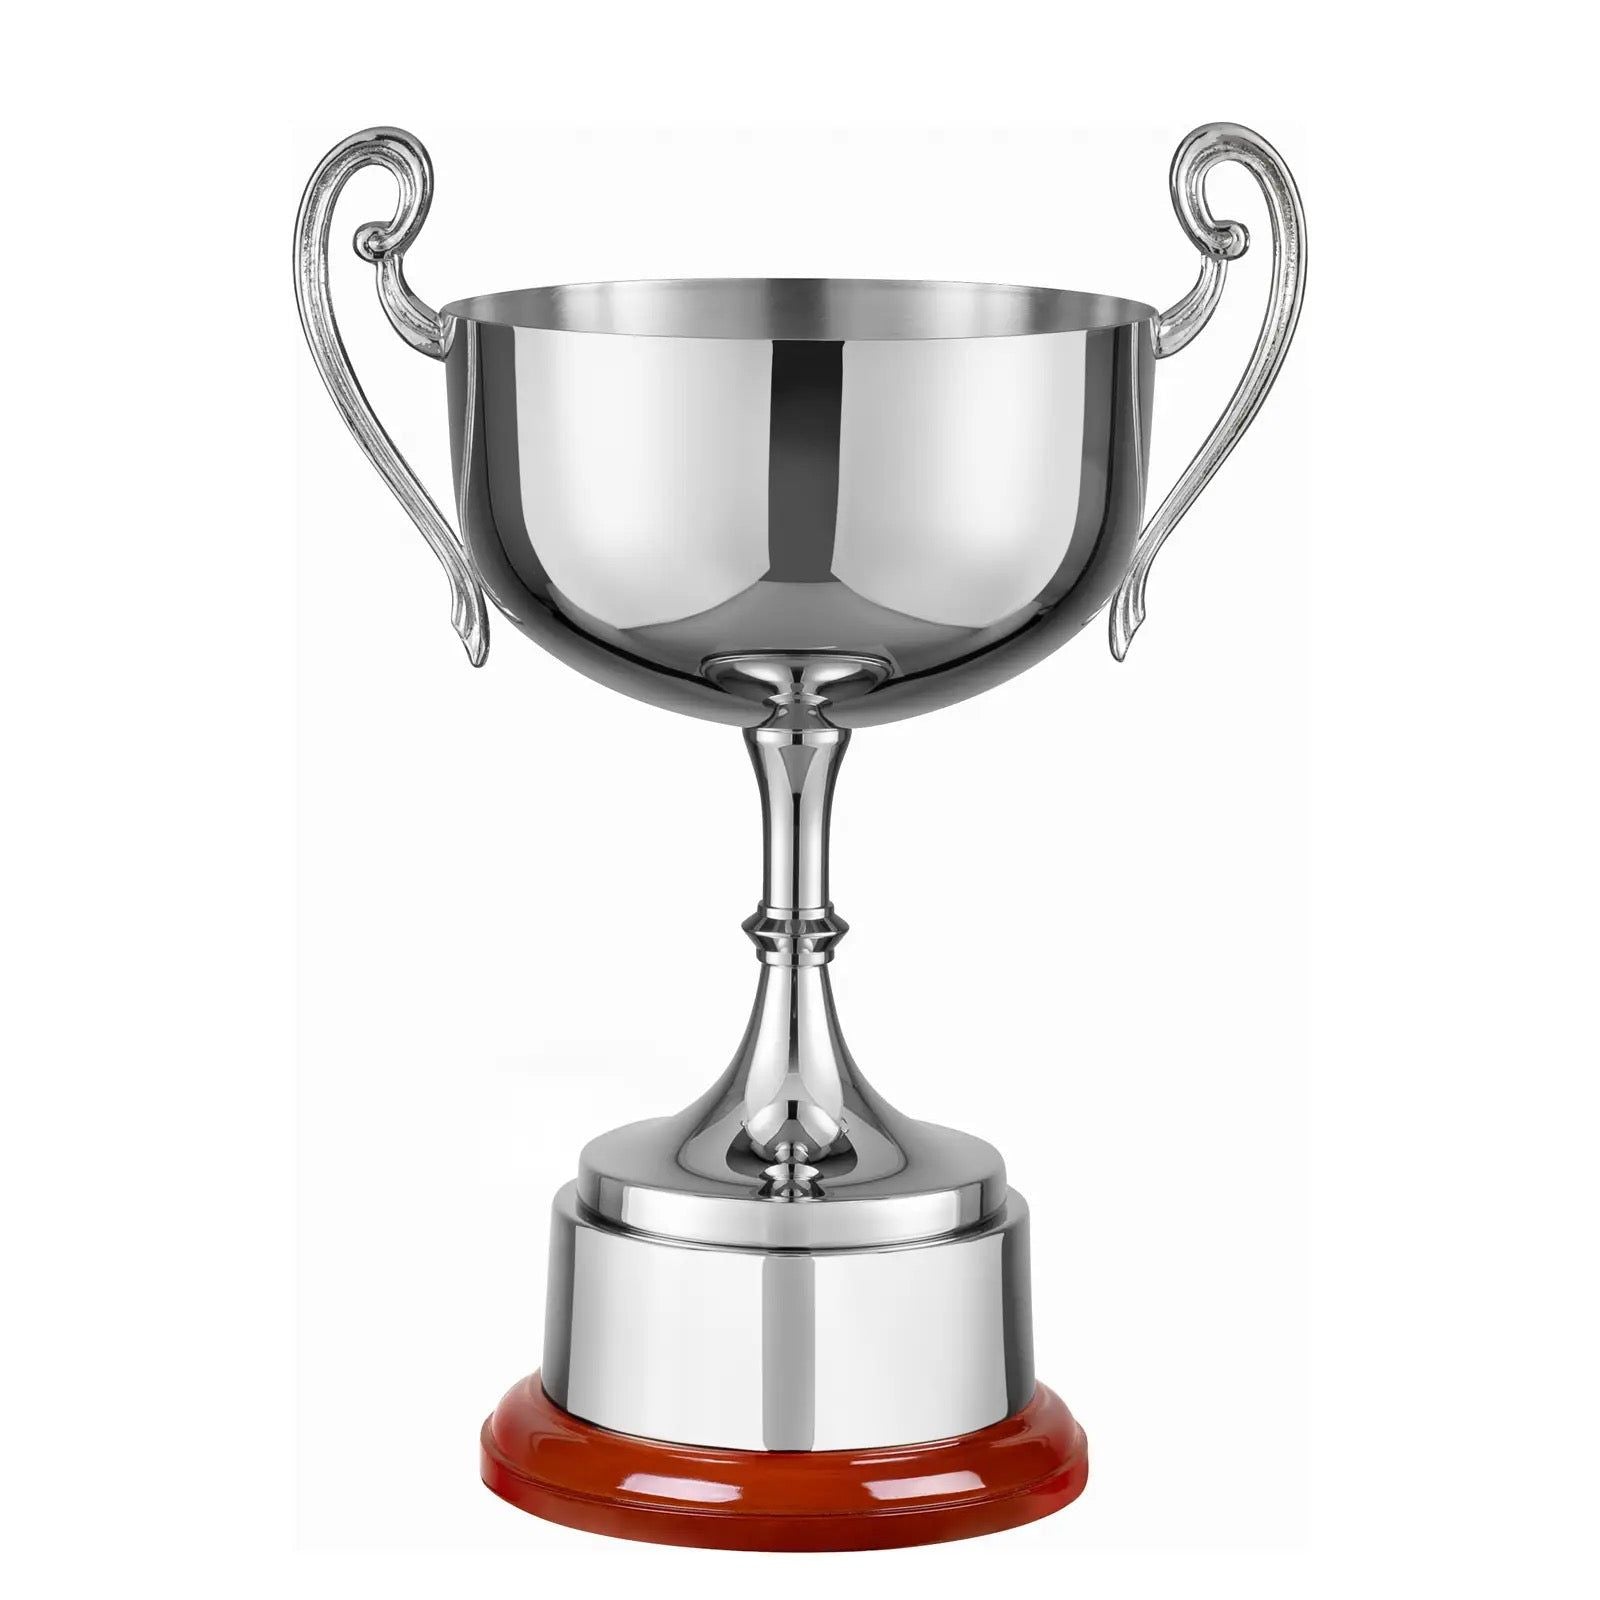 Conquest Revolution Cambridge Trophy Cup